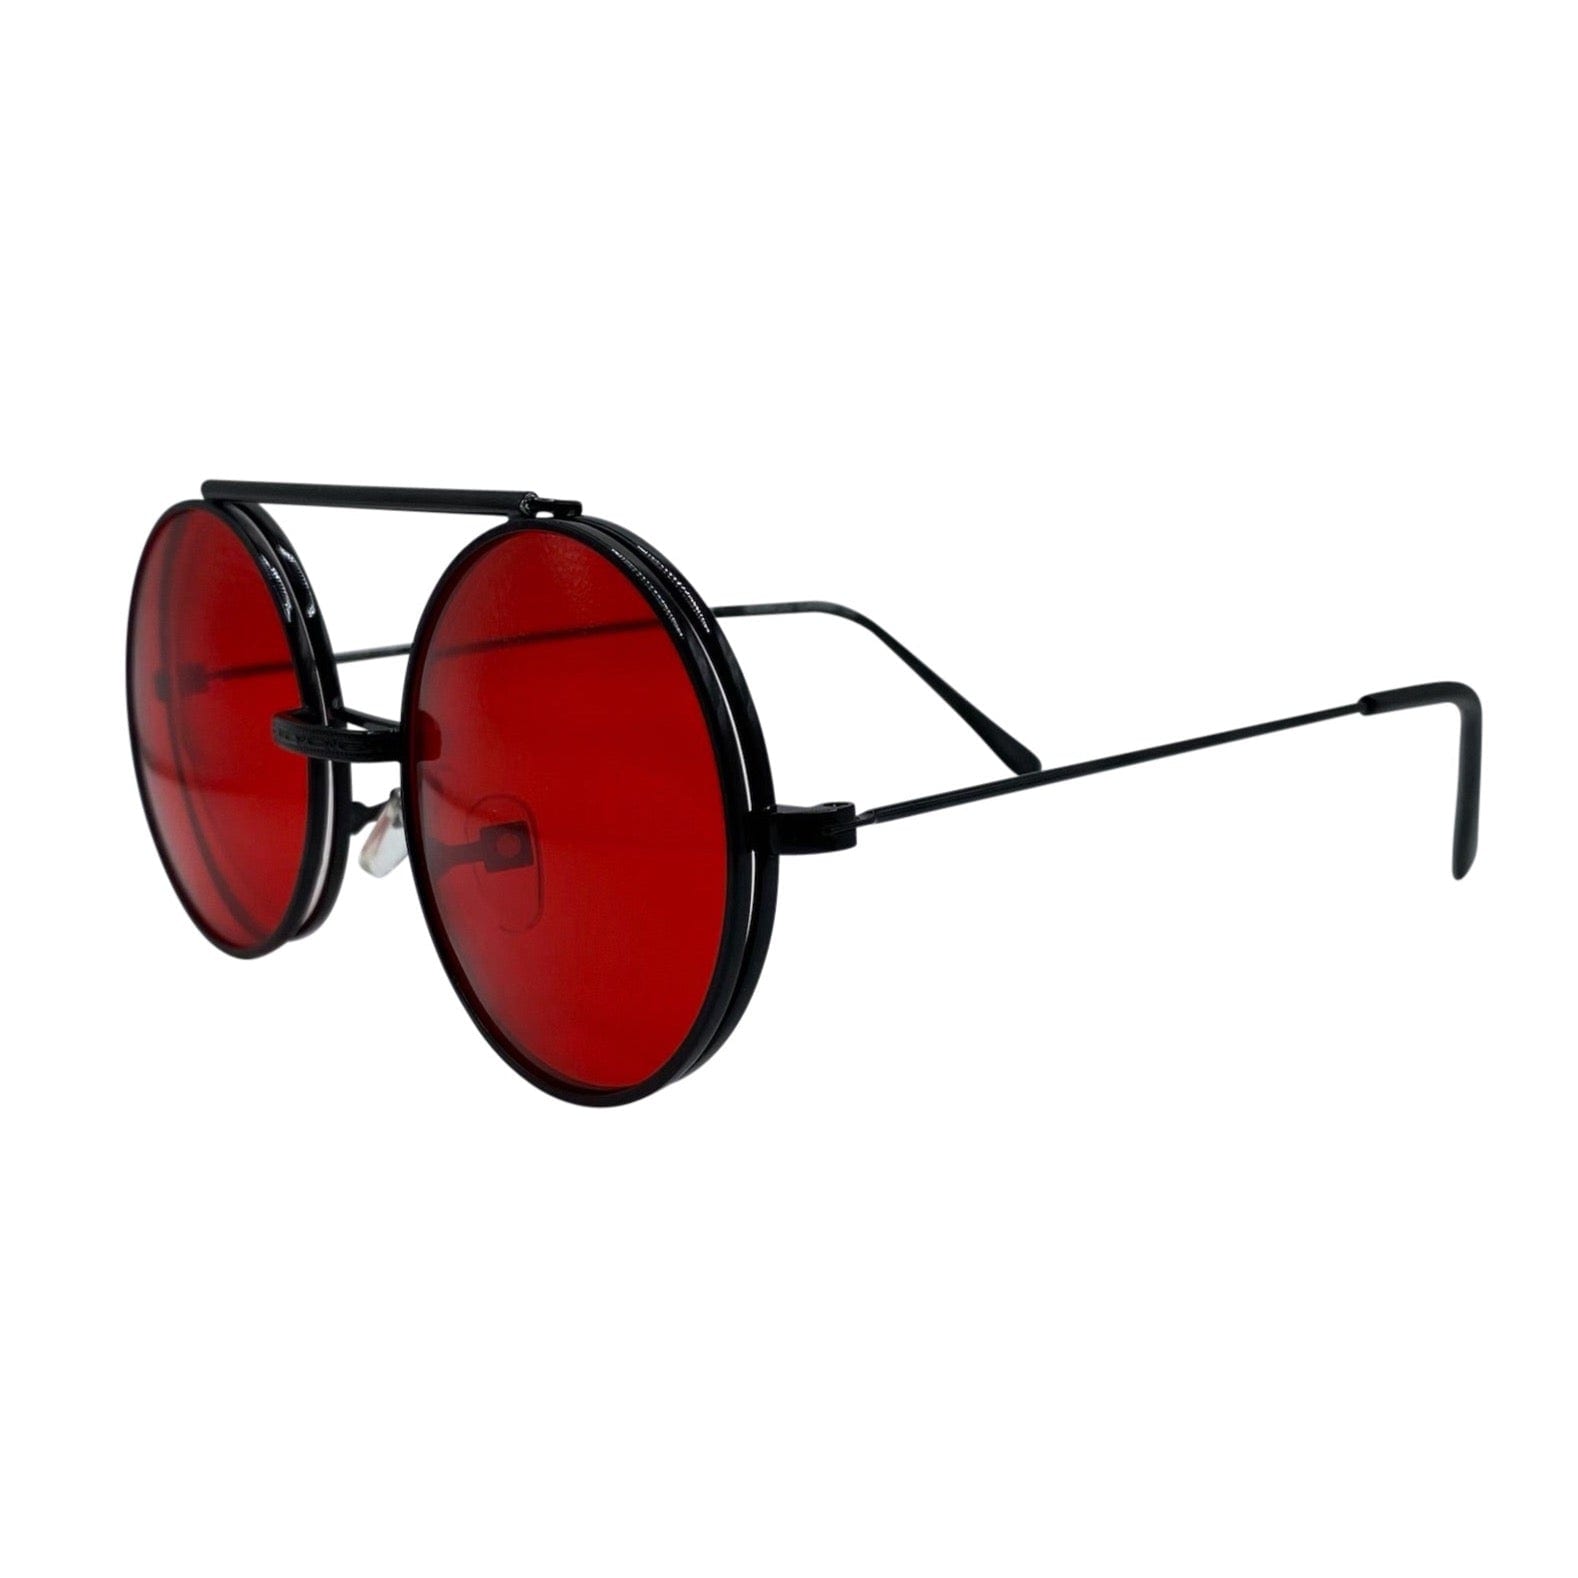 FLIP-CO Black/Red Flip-Up Sunglasses